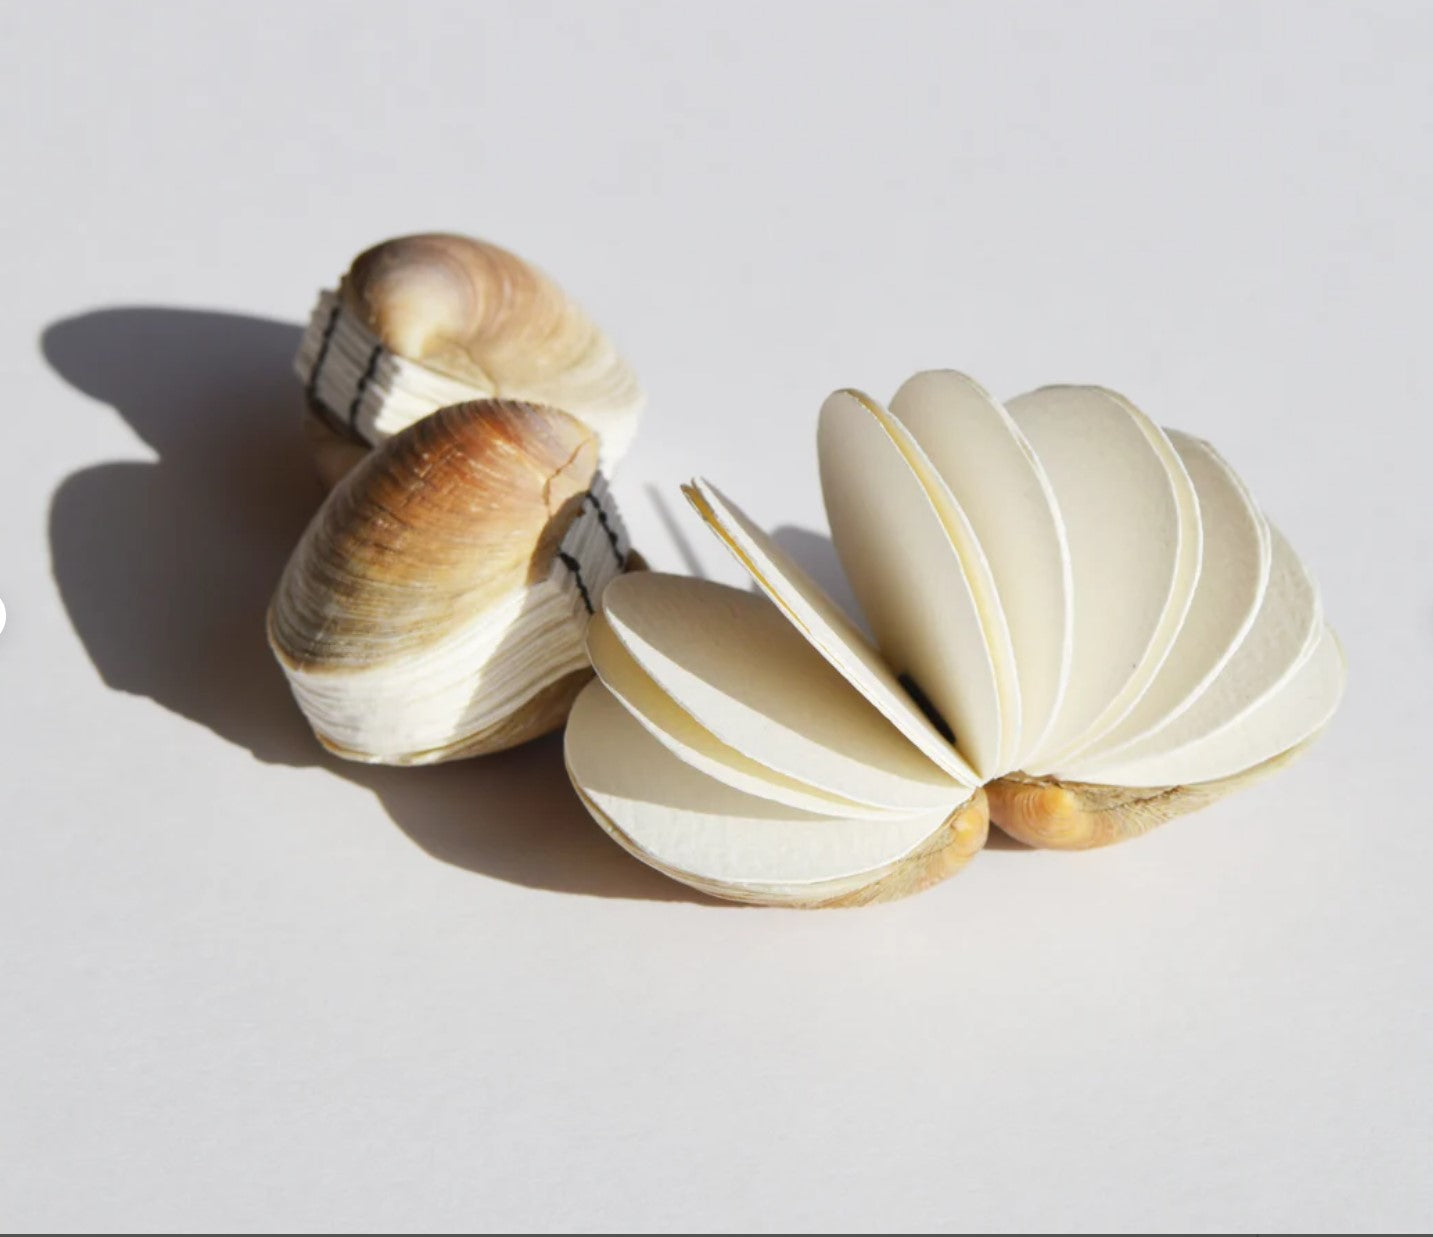 Genuine seashell art journal / Blank book / Micro watercolor paper sketchbook / tiny handmade art / nature walk mini book / Manila clams